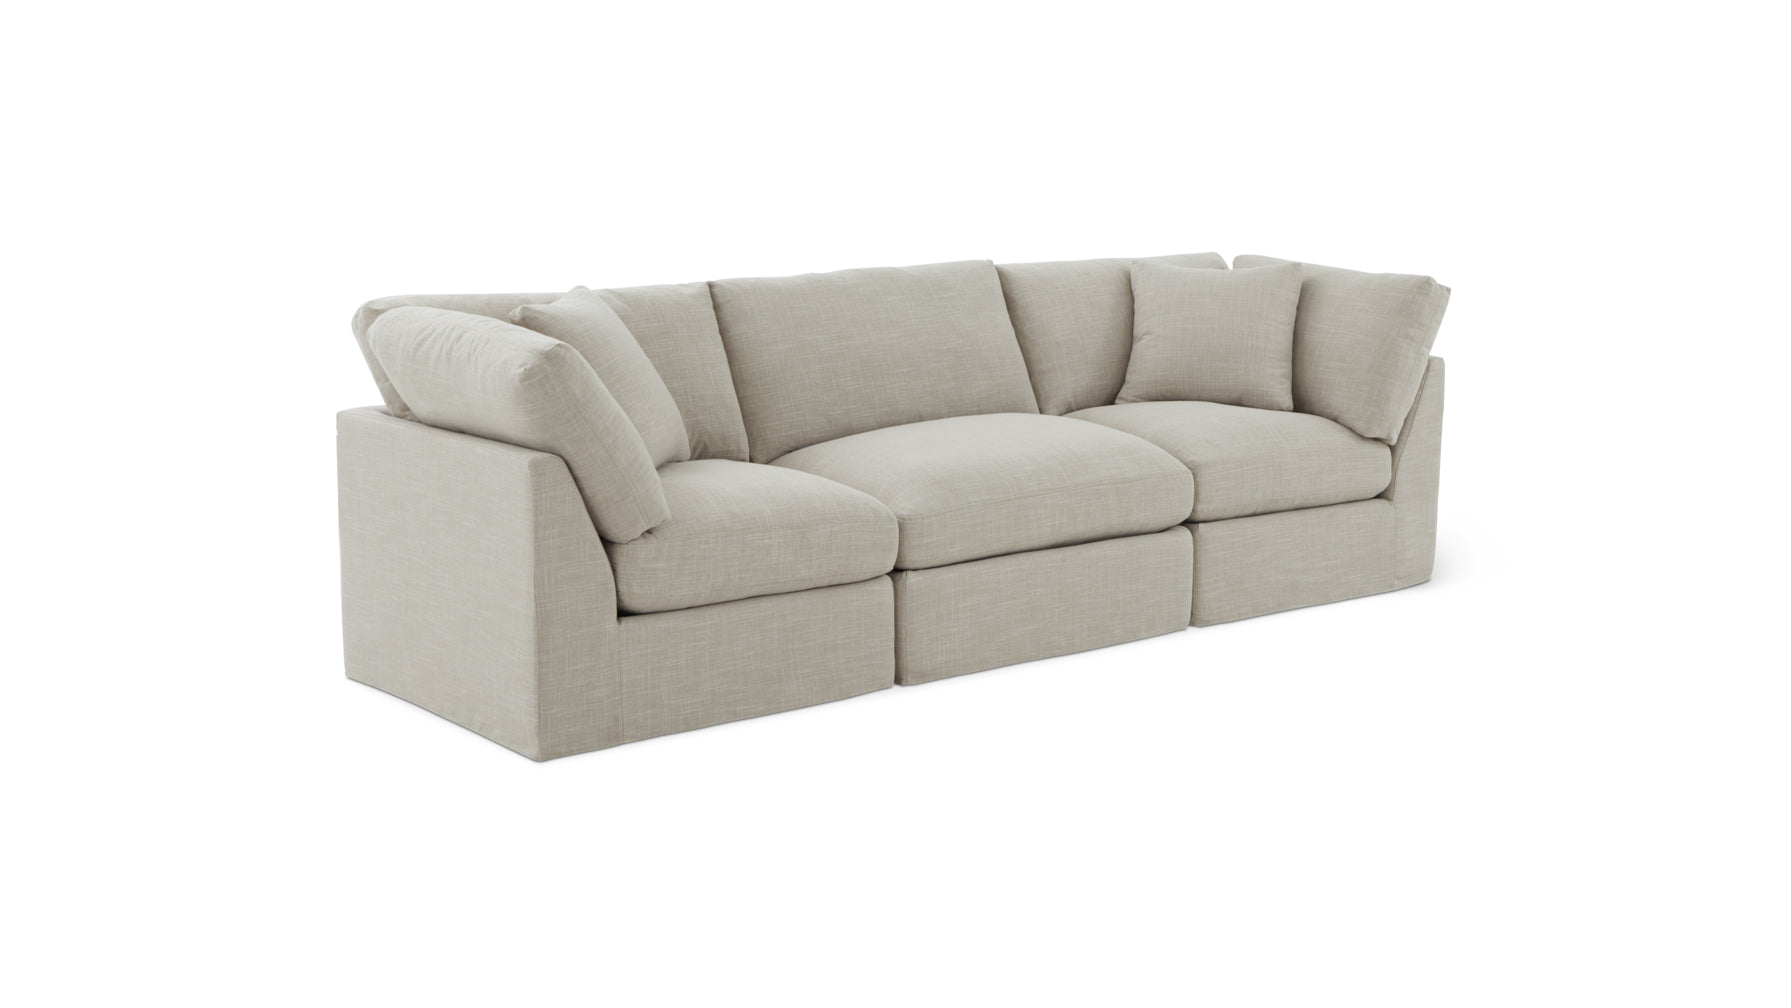 Get Together™ 3-Piece Modular Sofa, Standard, Light Pebble - Image 2